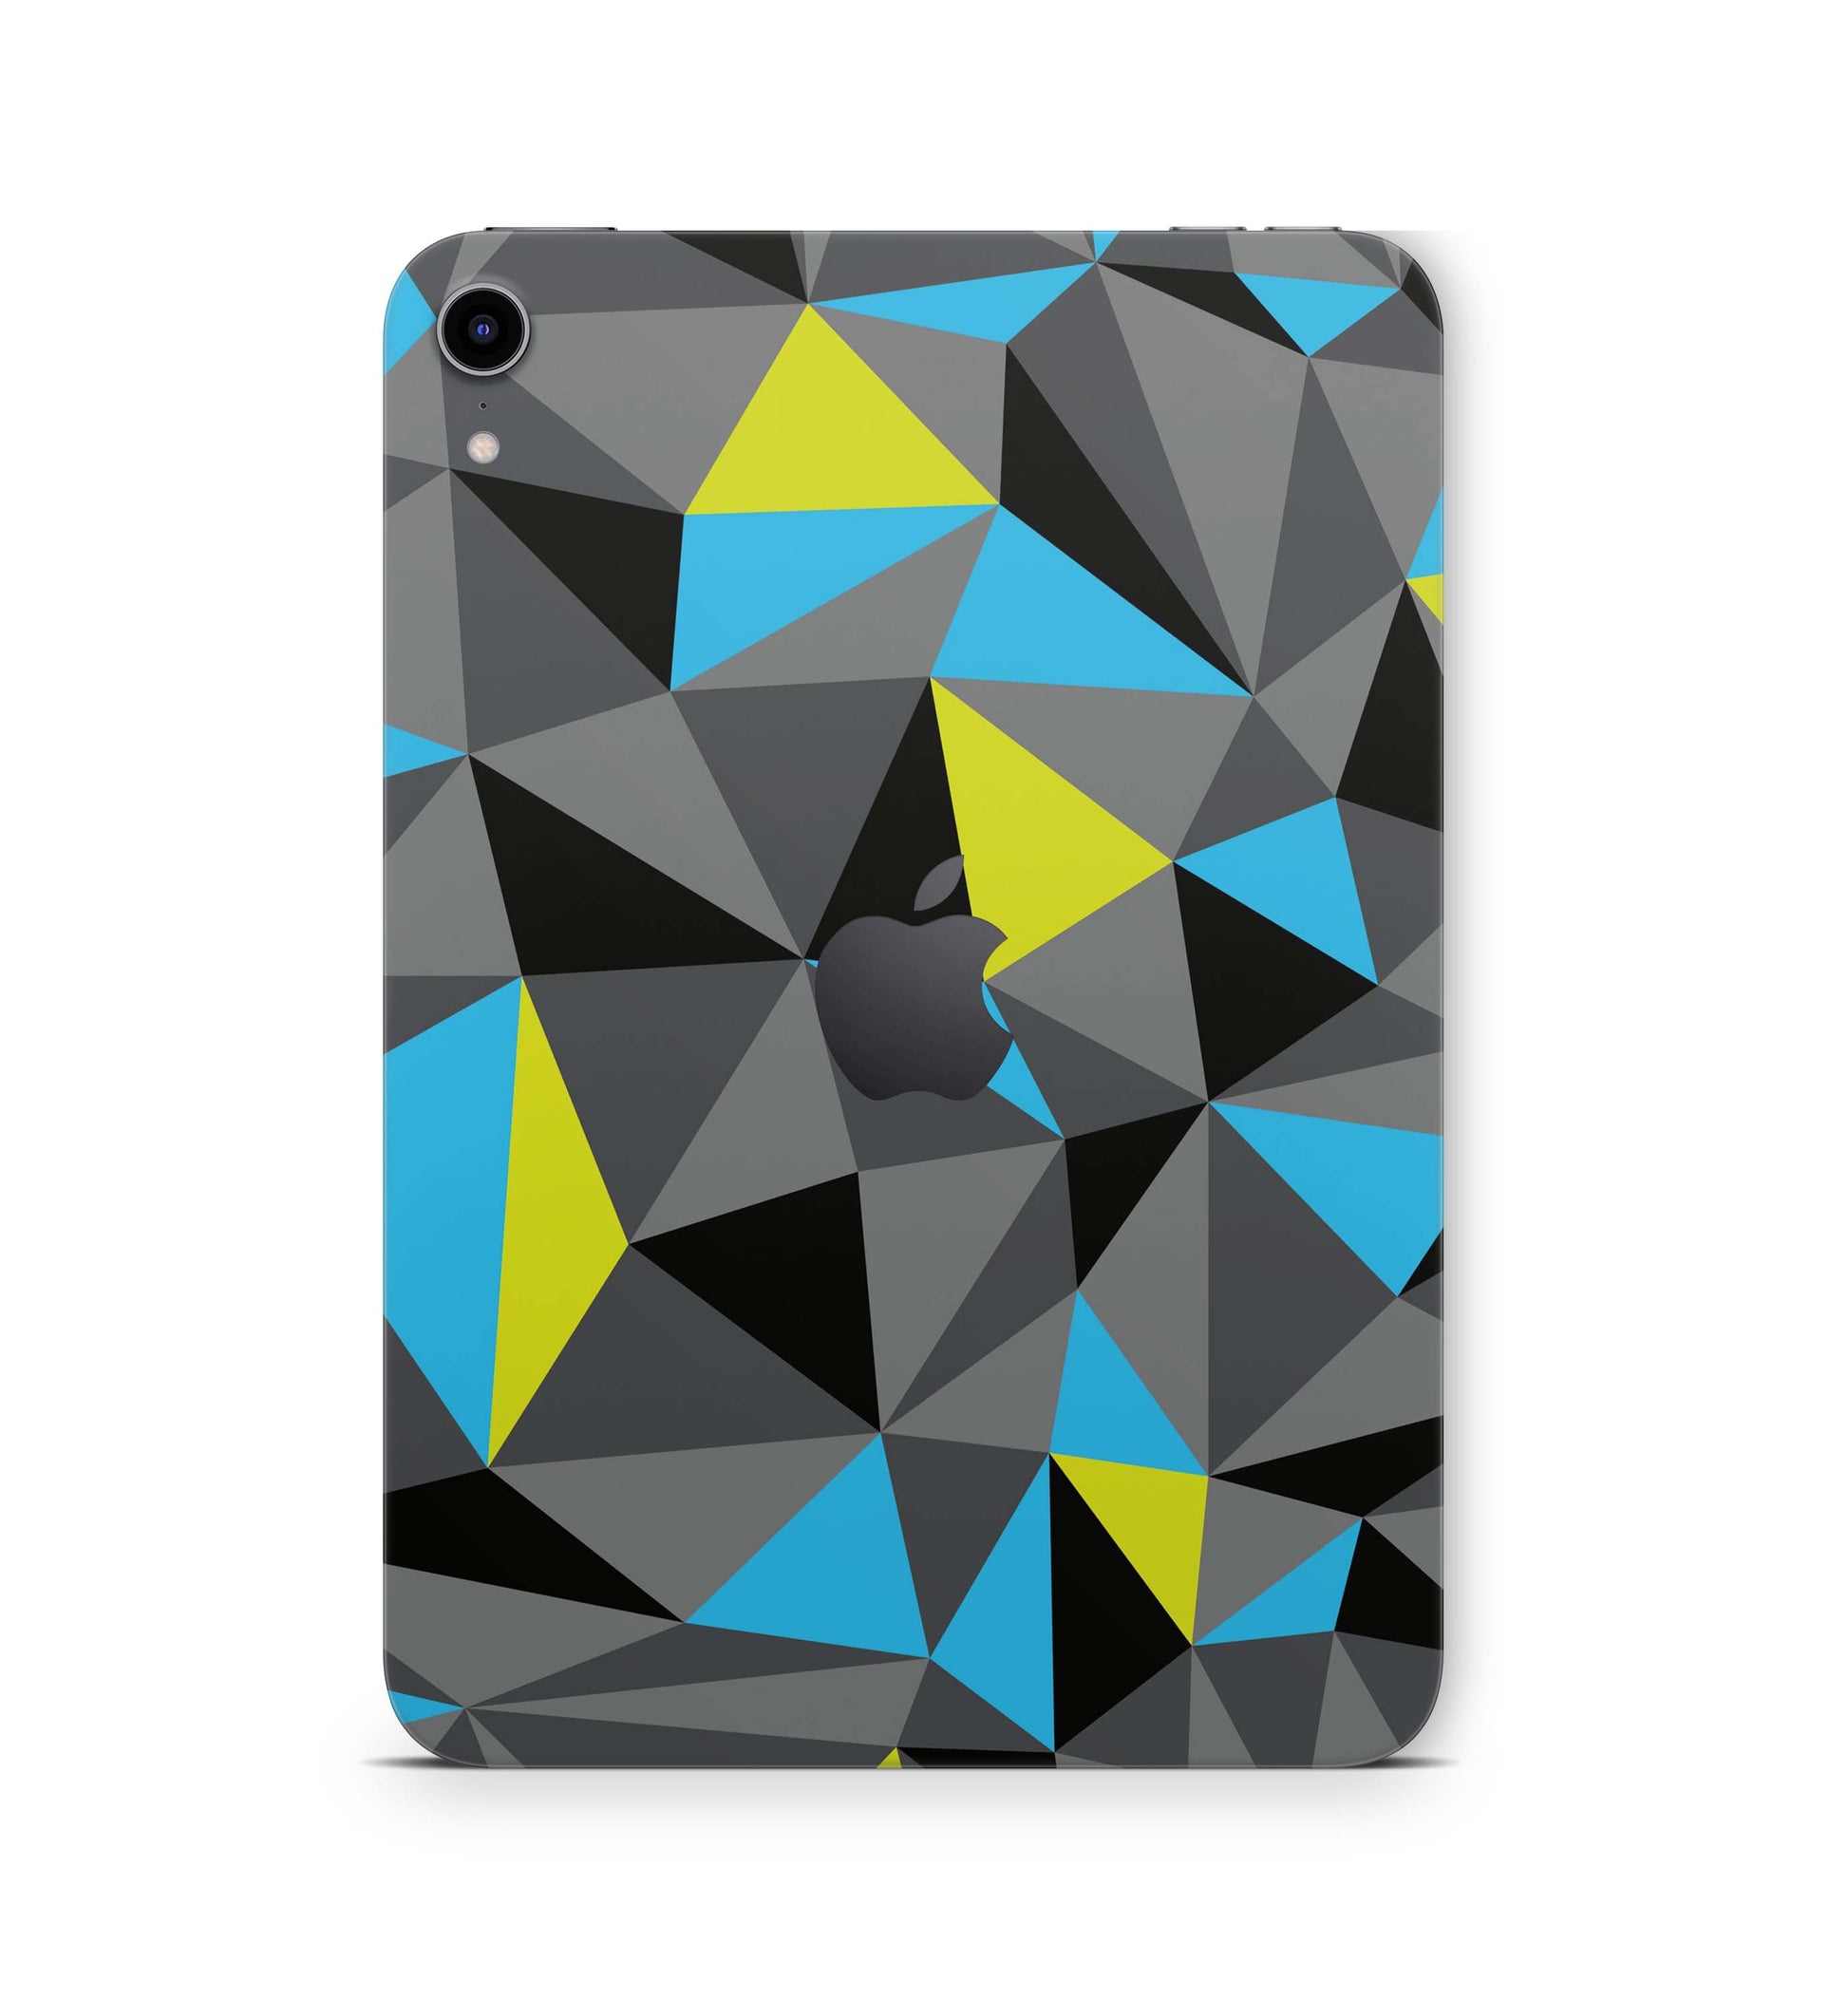 iPad Air Skin Design Cover Folie Vinyl Skins & Wraps für alle iPad Air Modelle Aufkleber Skins4u Polycolor  